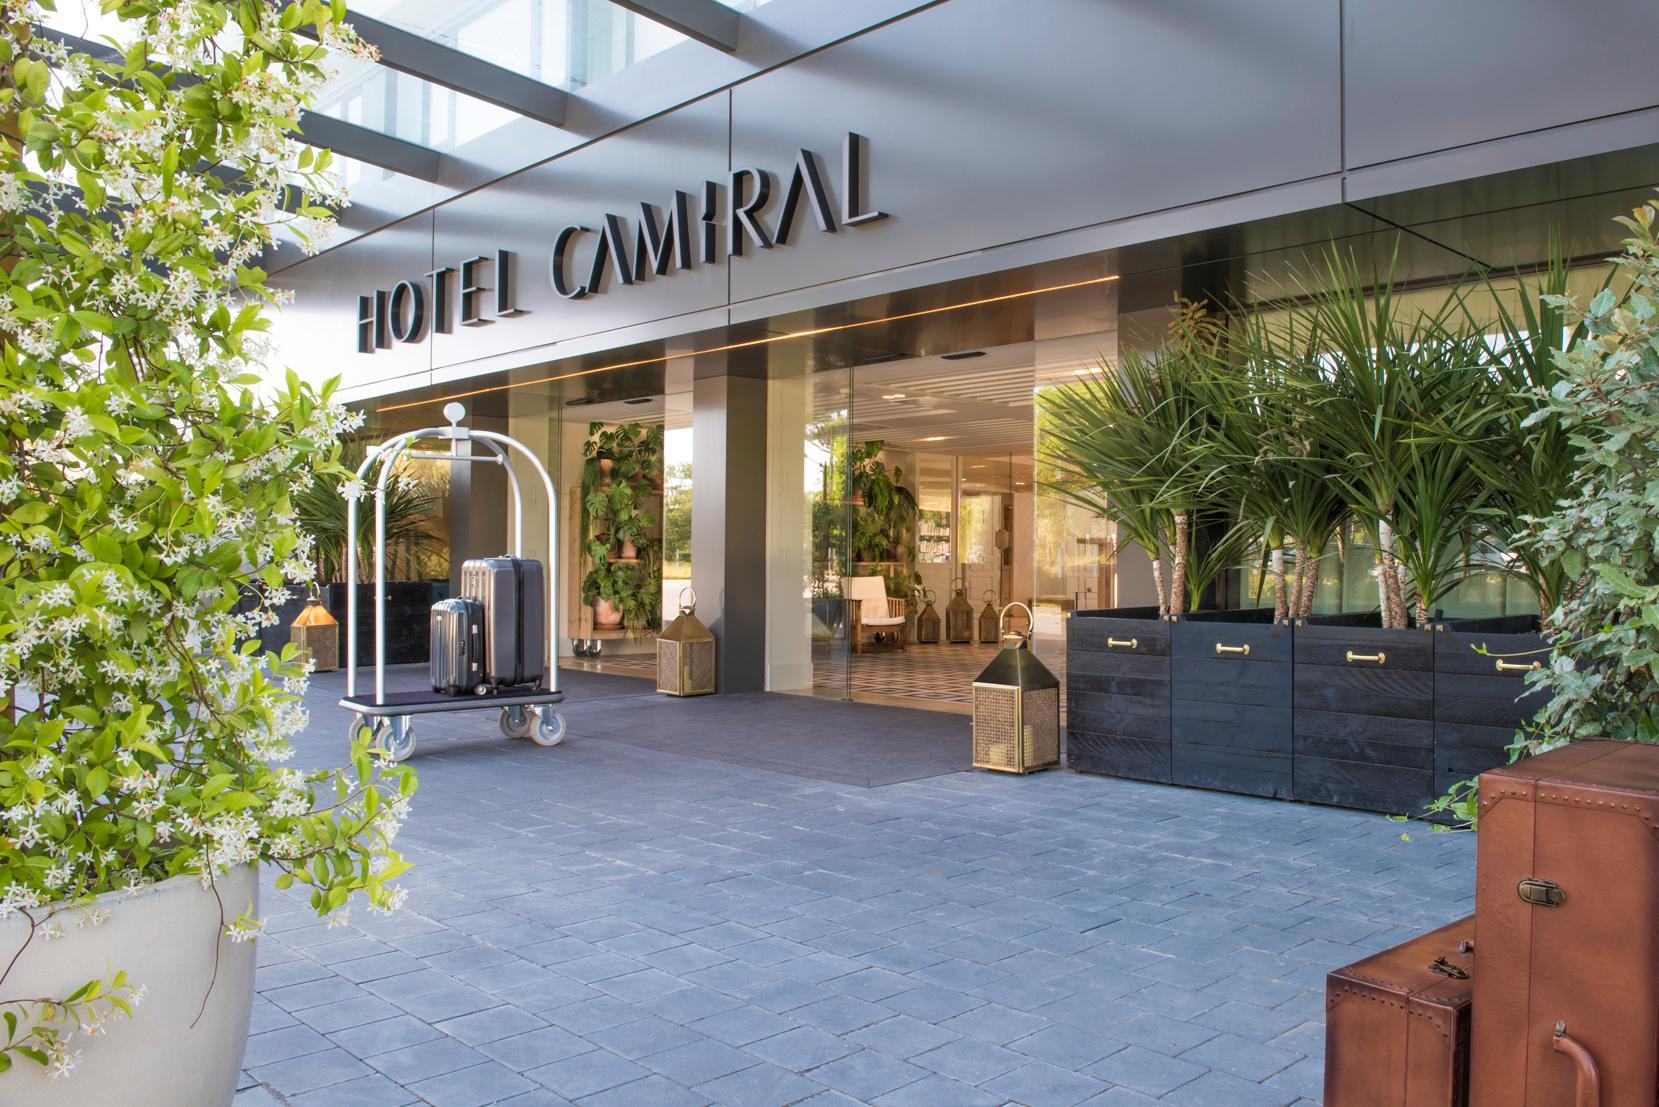 Hotel Camiral image